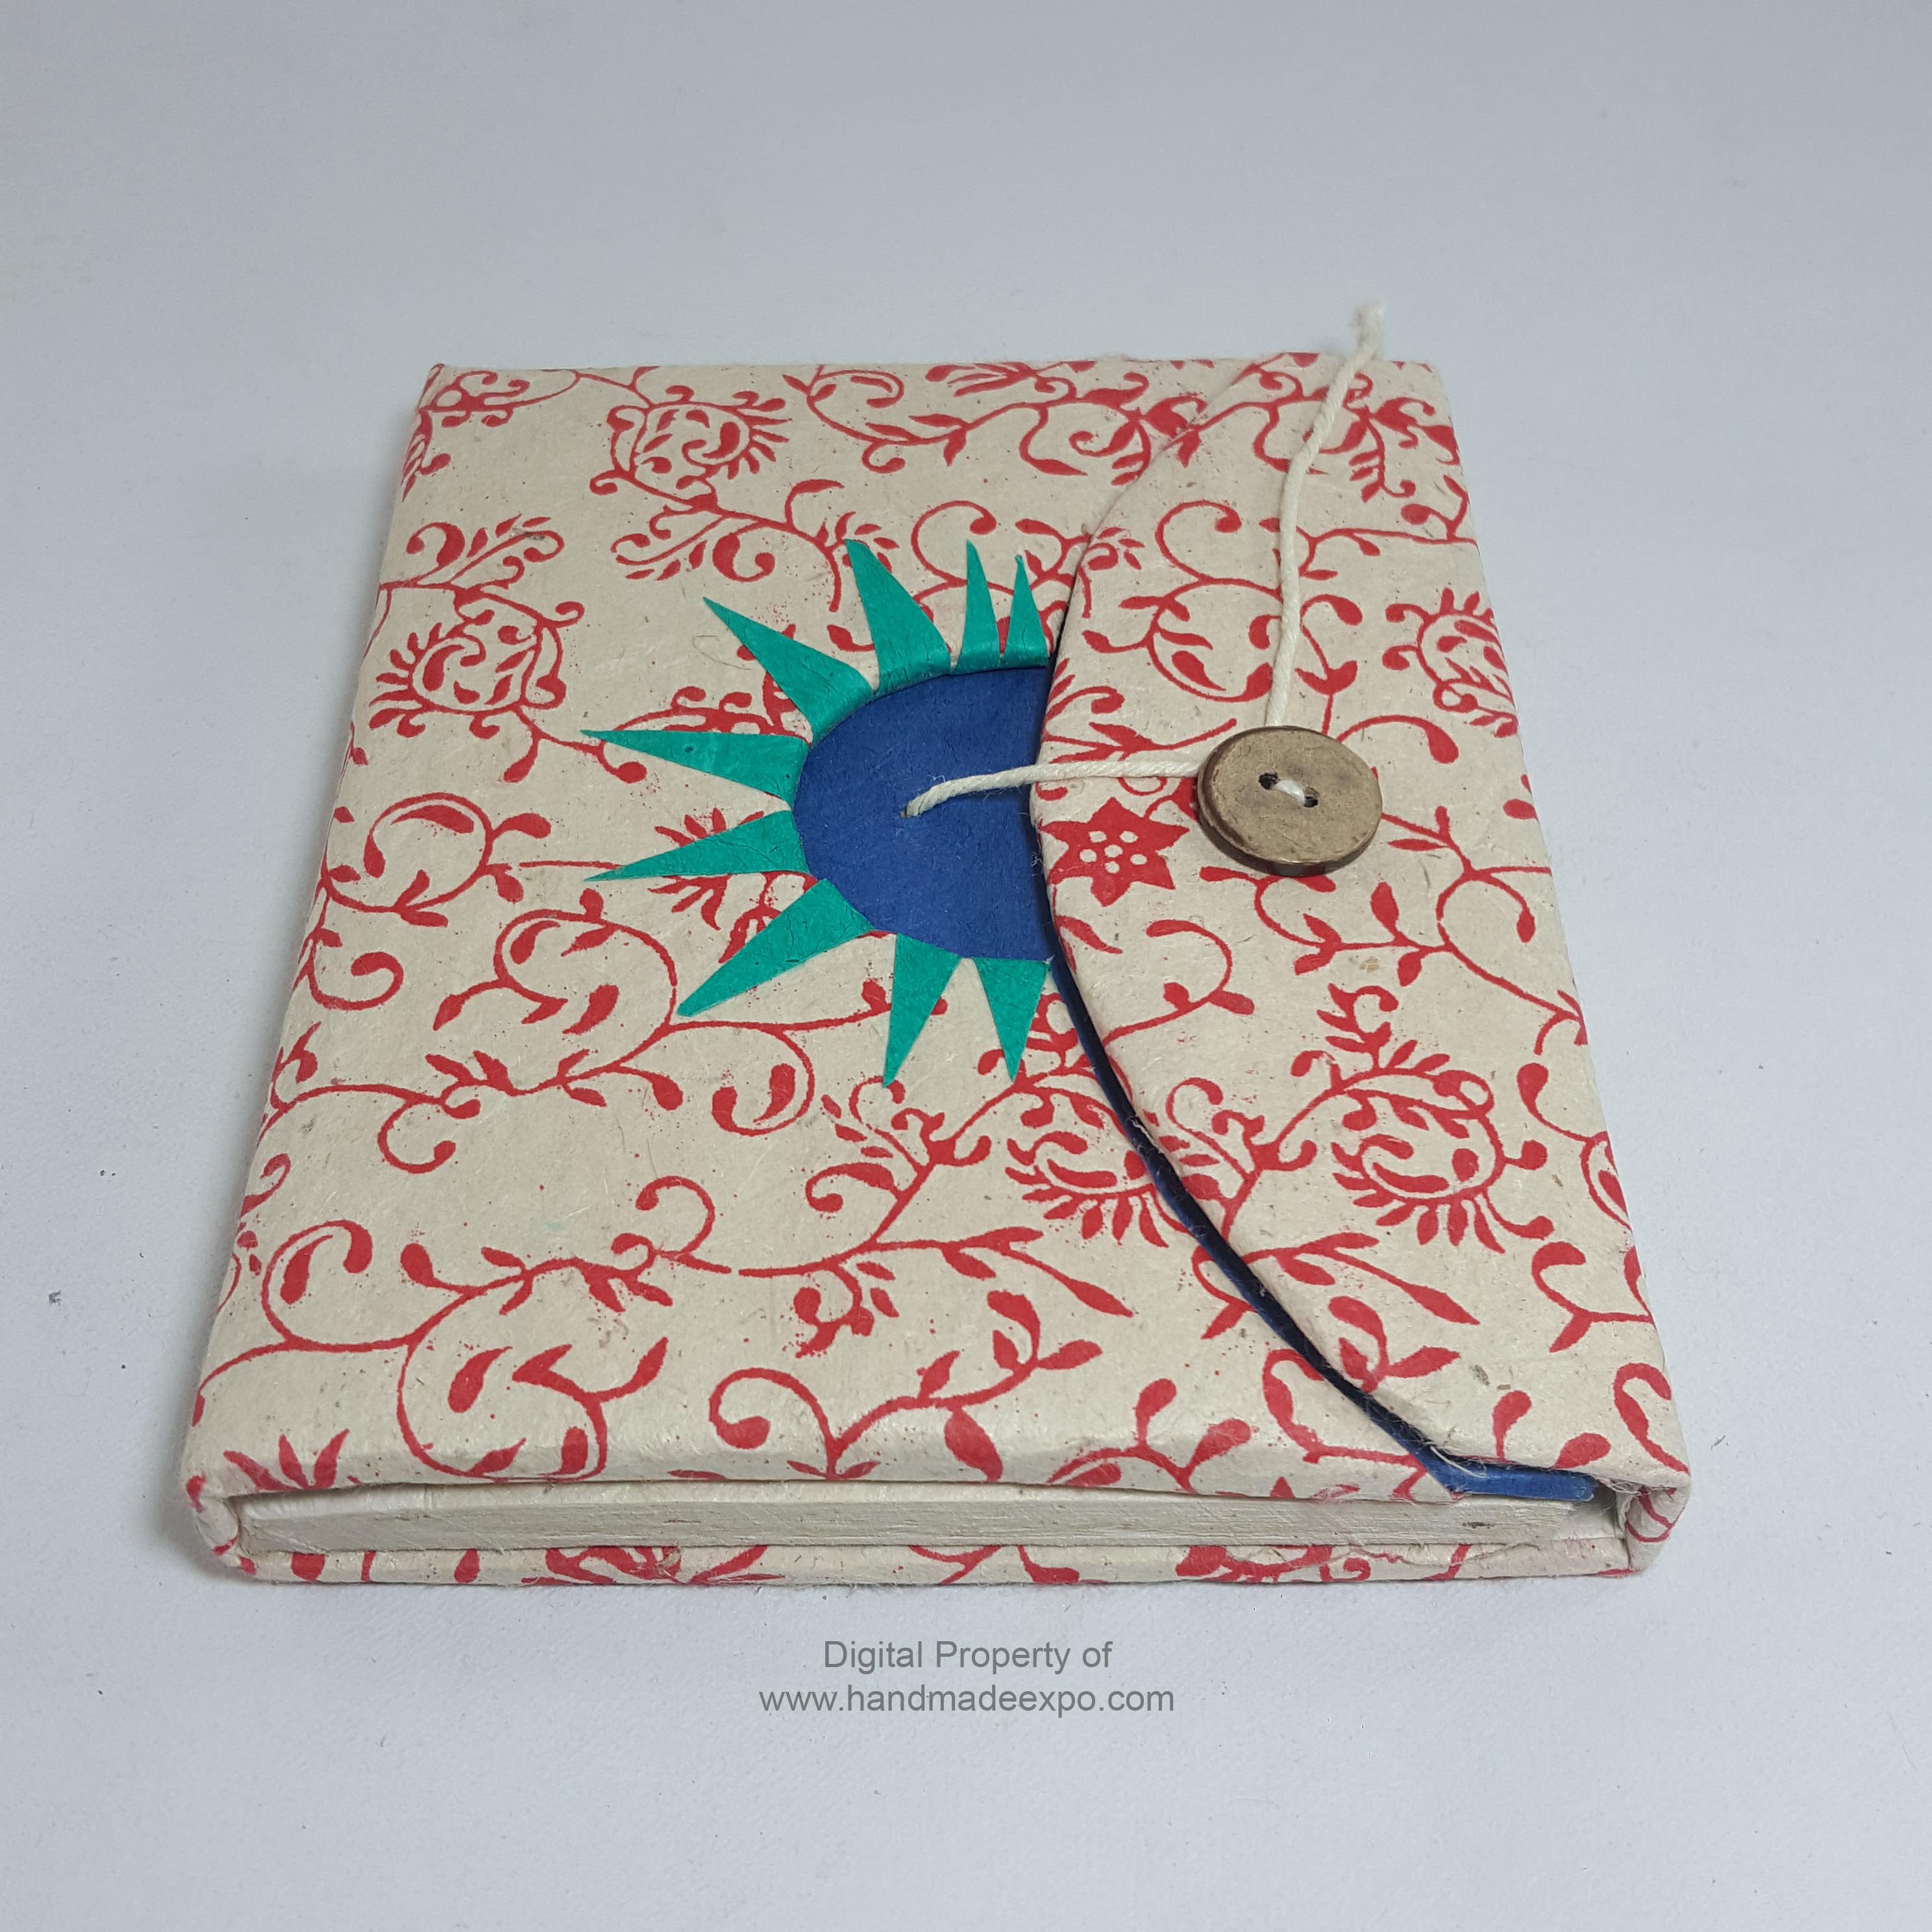 Easy Origami Book, Mini Notebook